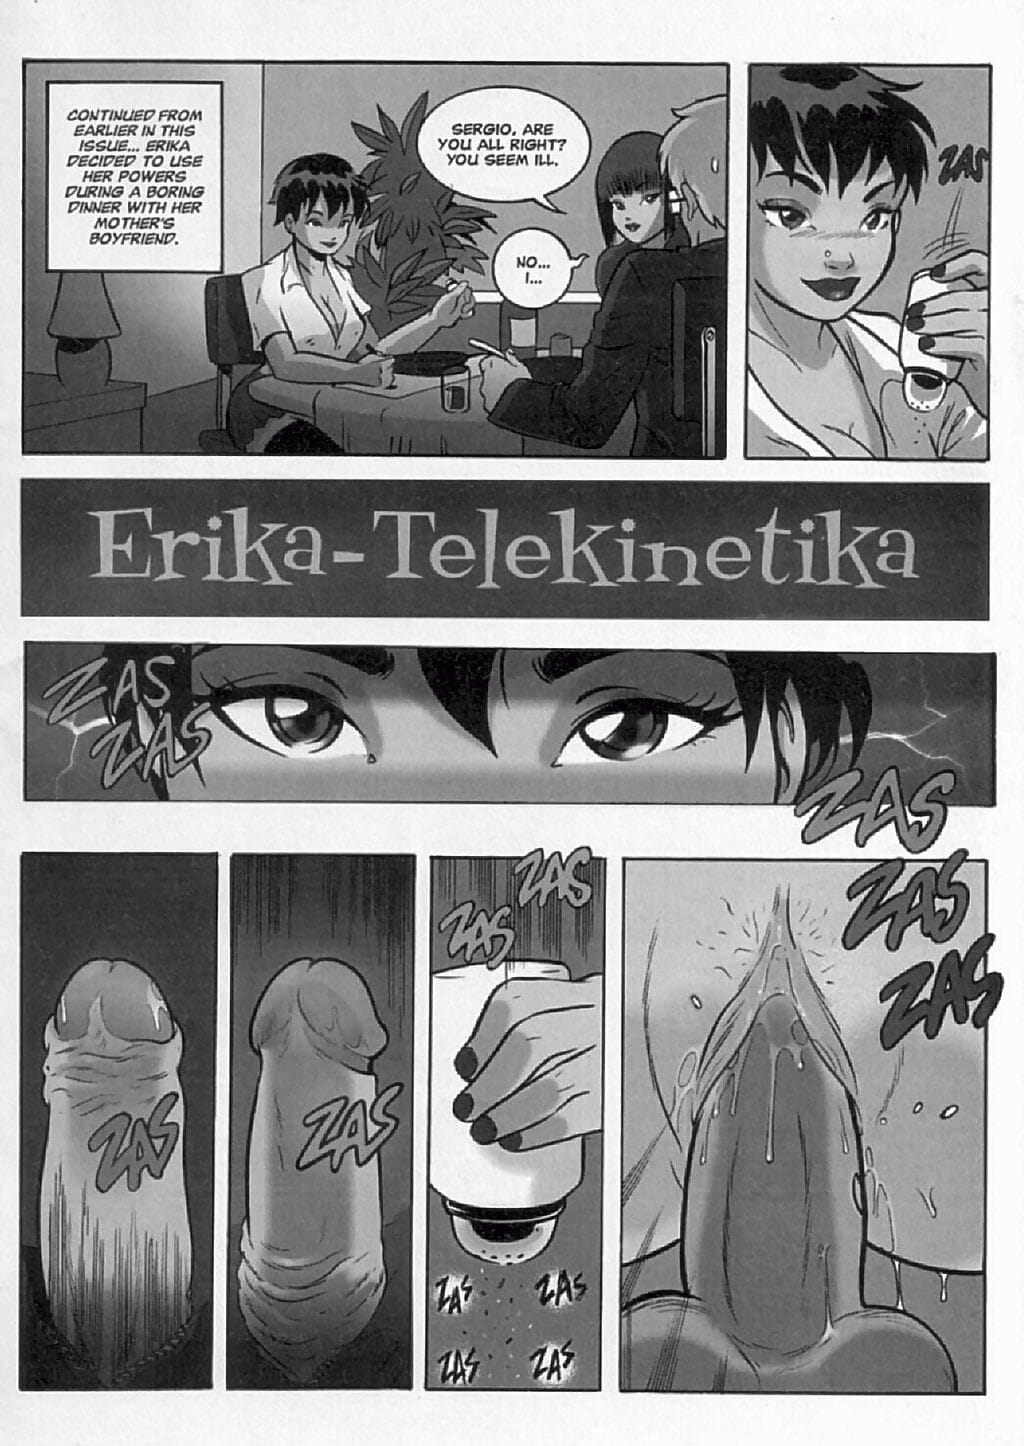 Erika Telekinetika #1 page 1